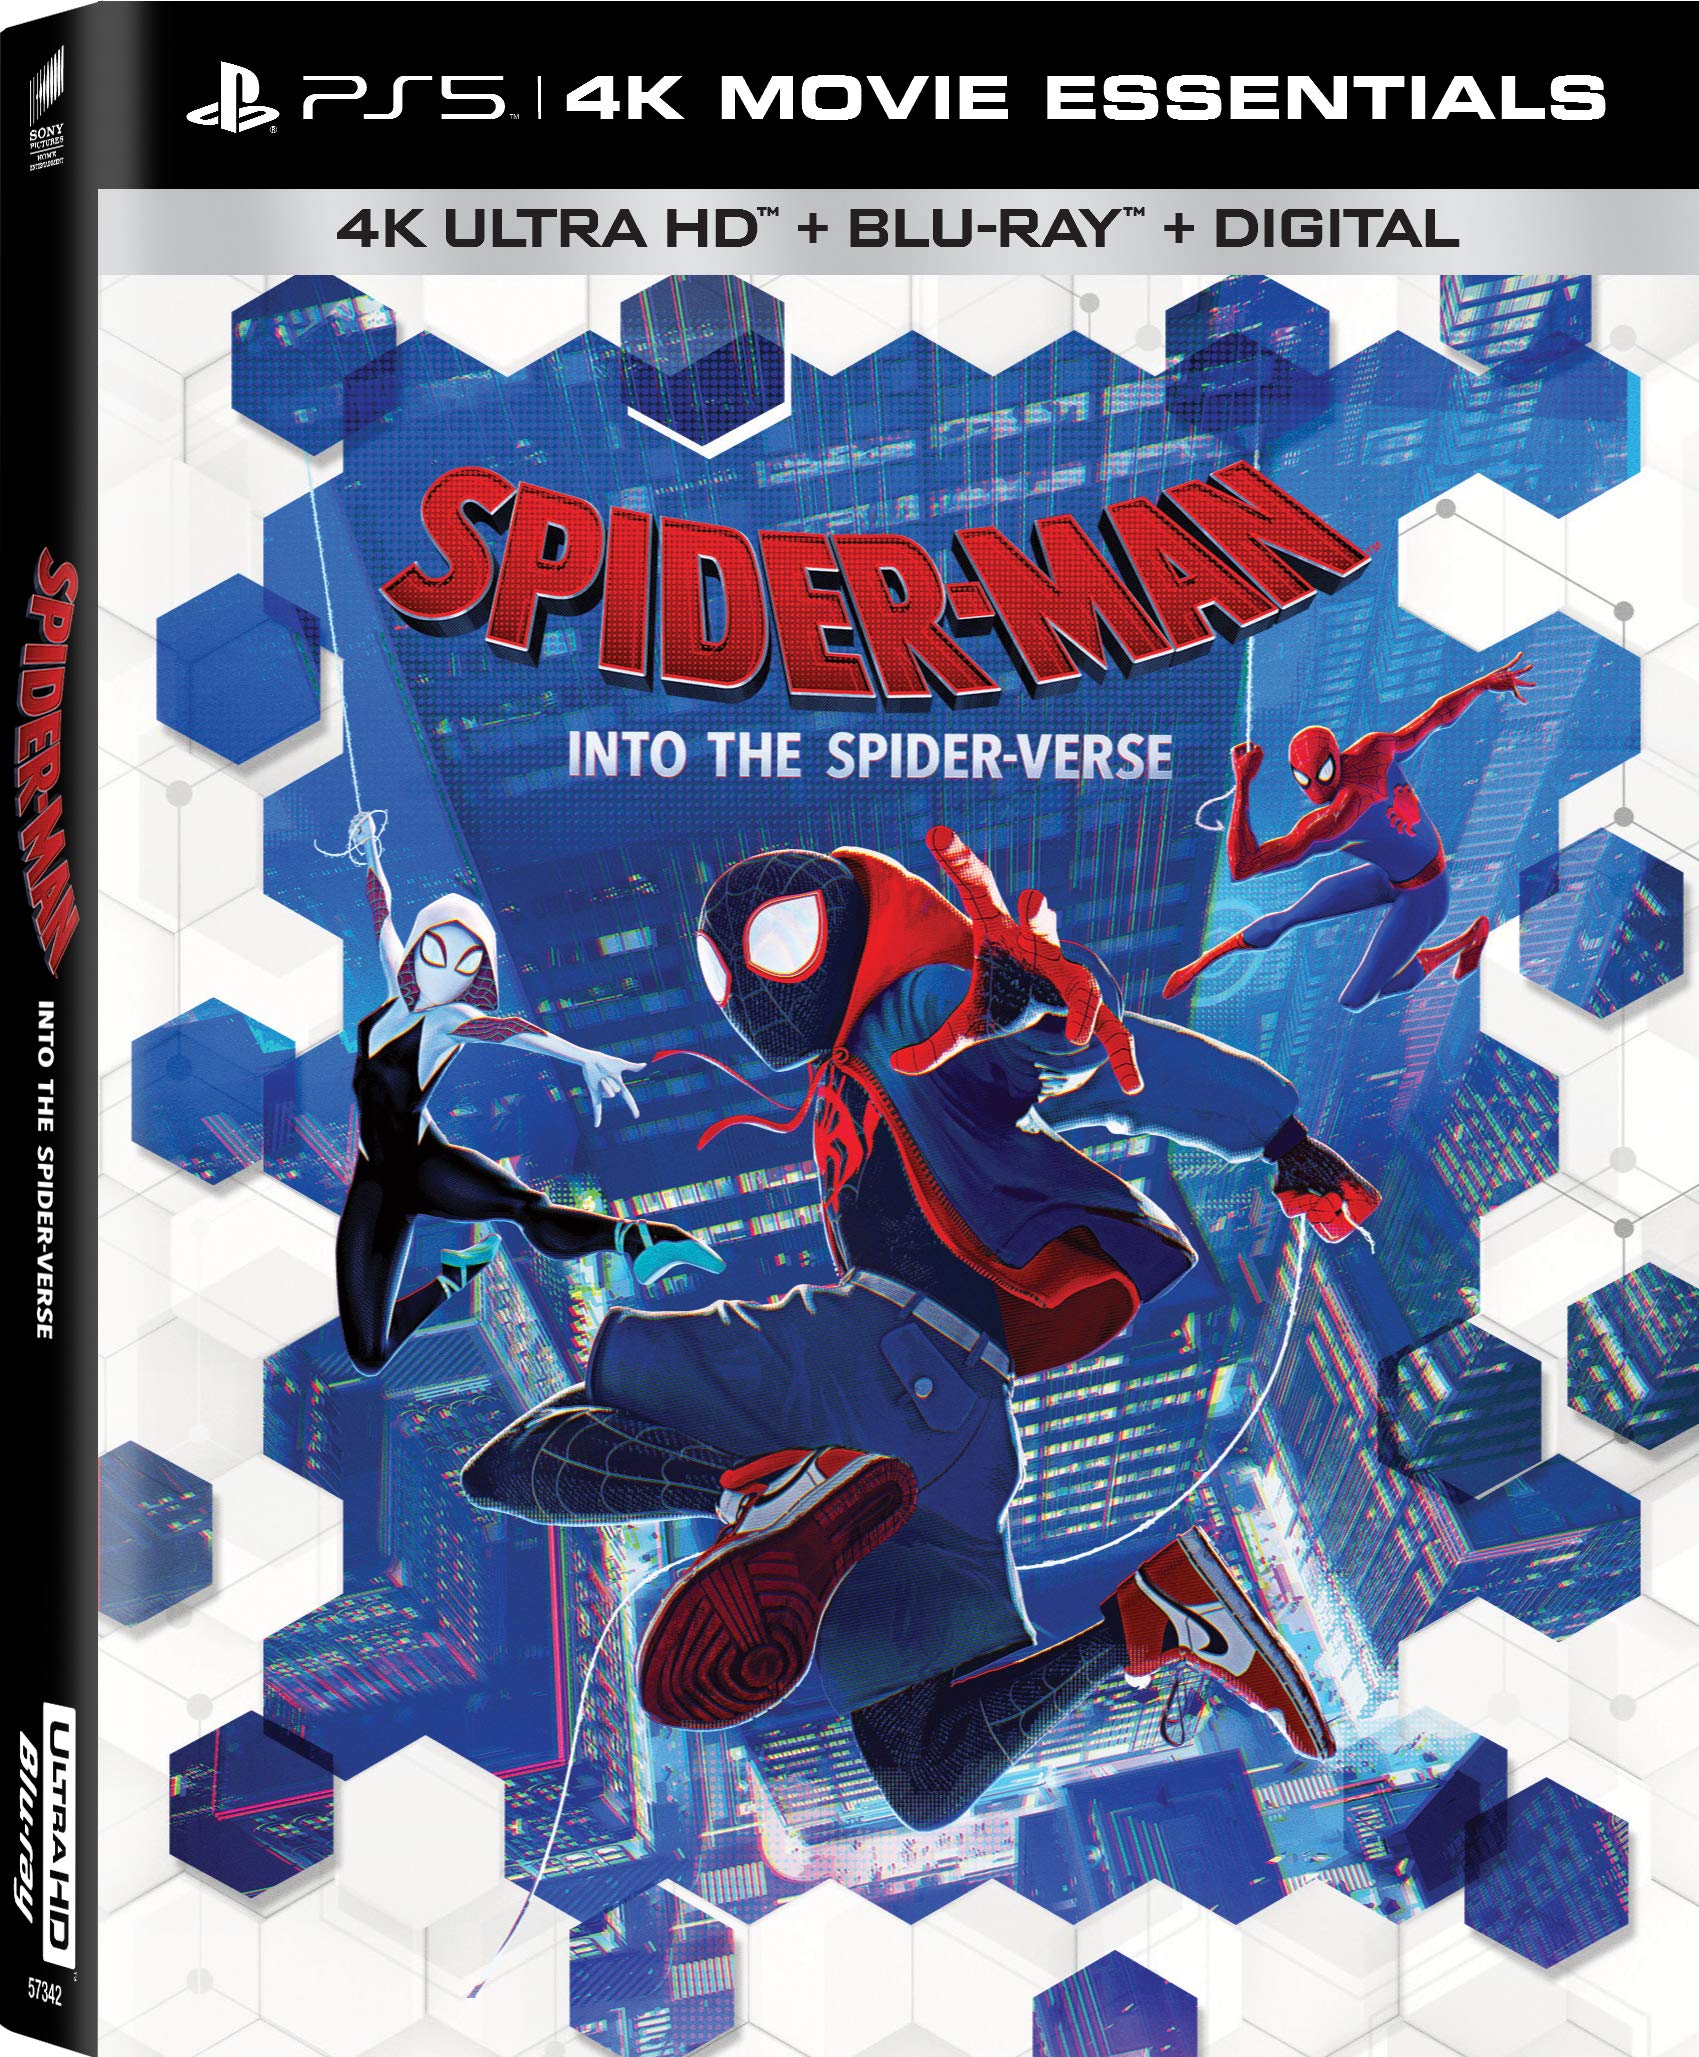 Spider-Man: Across The Spider-Verse/Spider-Man: Into The Spider-Verse (DVD  + Digital Copy)